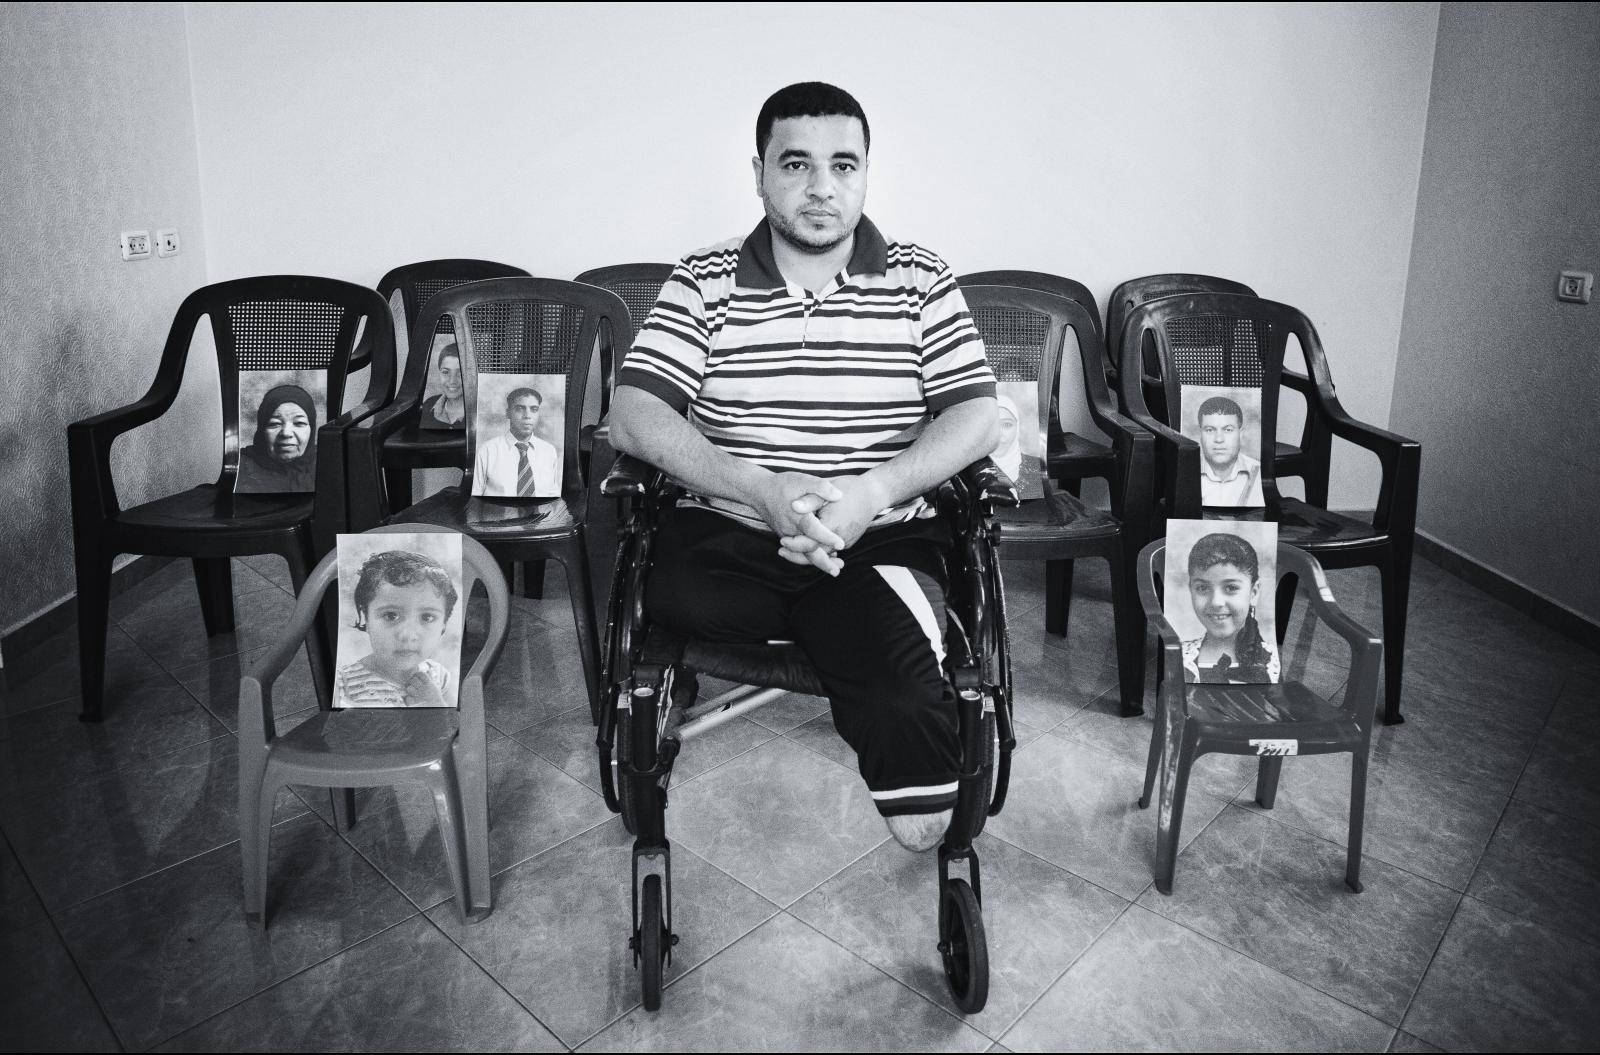  Ziad Deeb, Gaza War 2008-2009 ...severe injuries in the bombing.